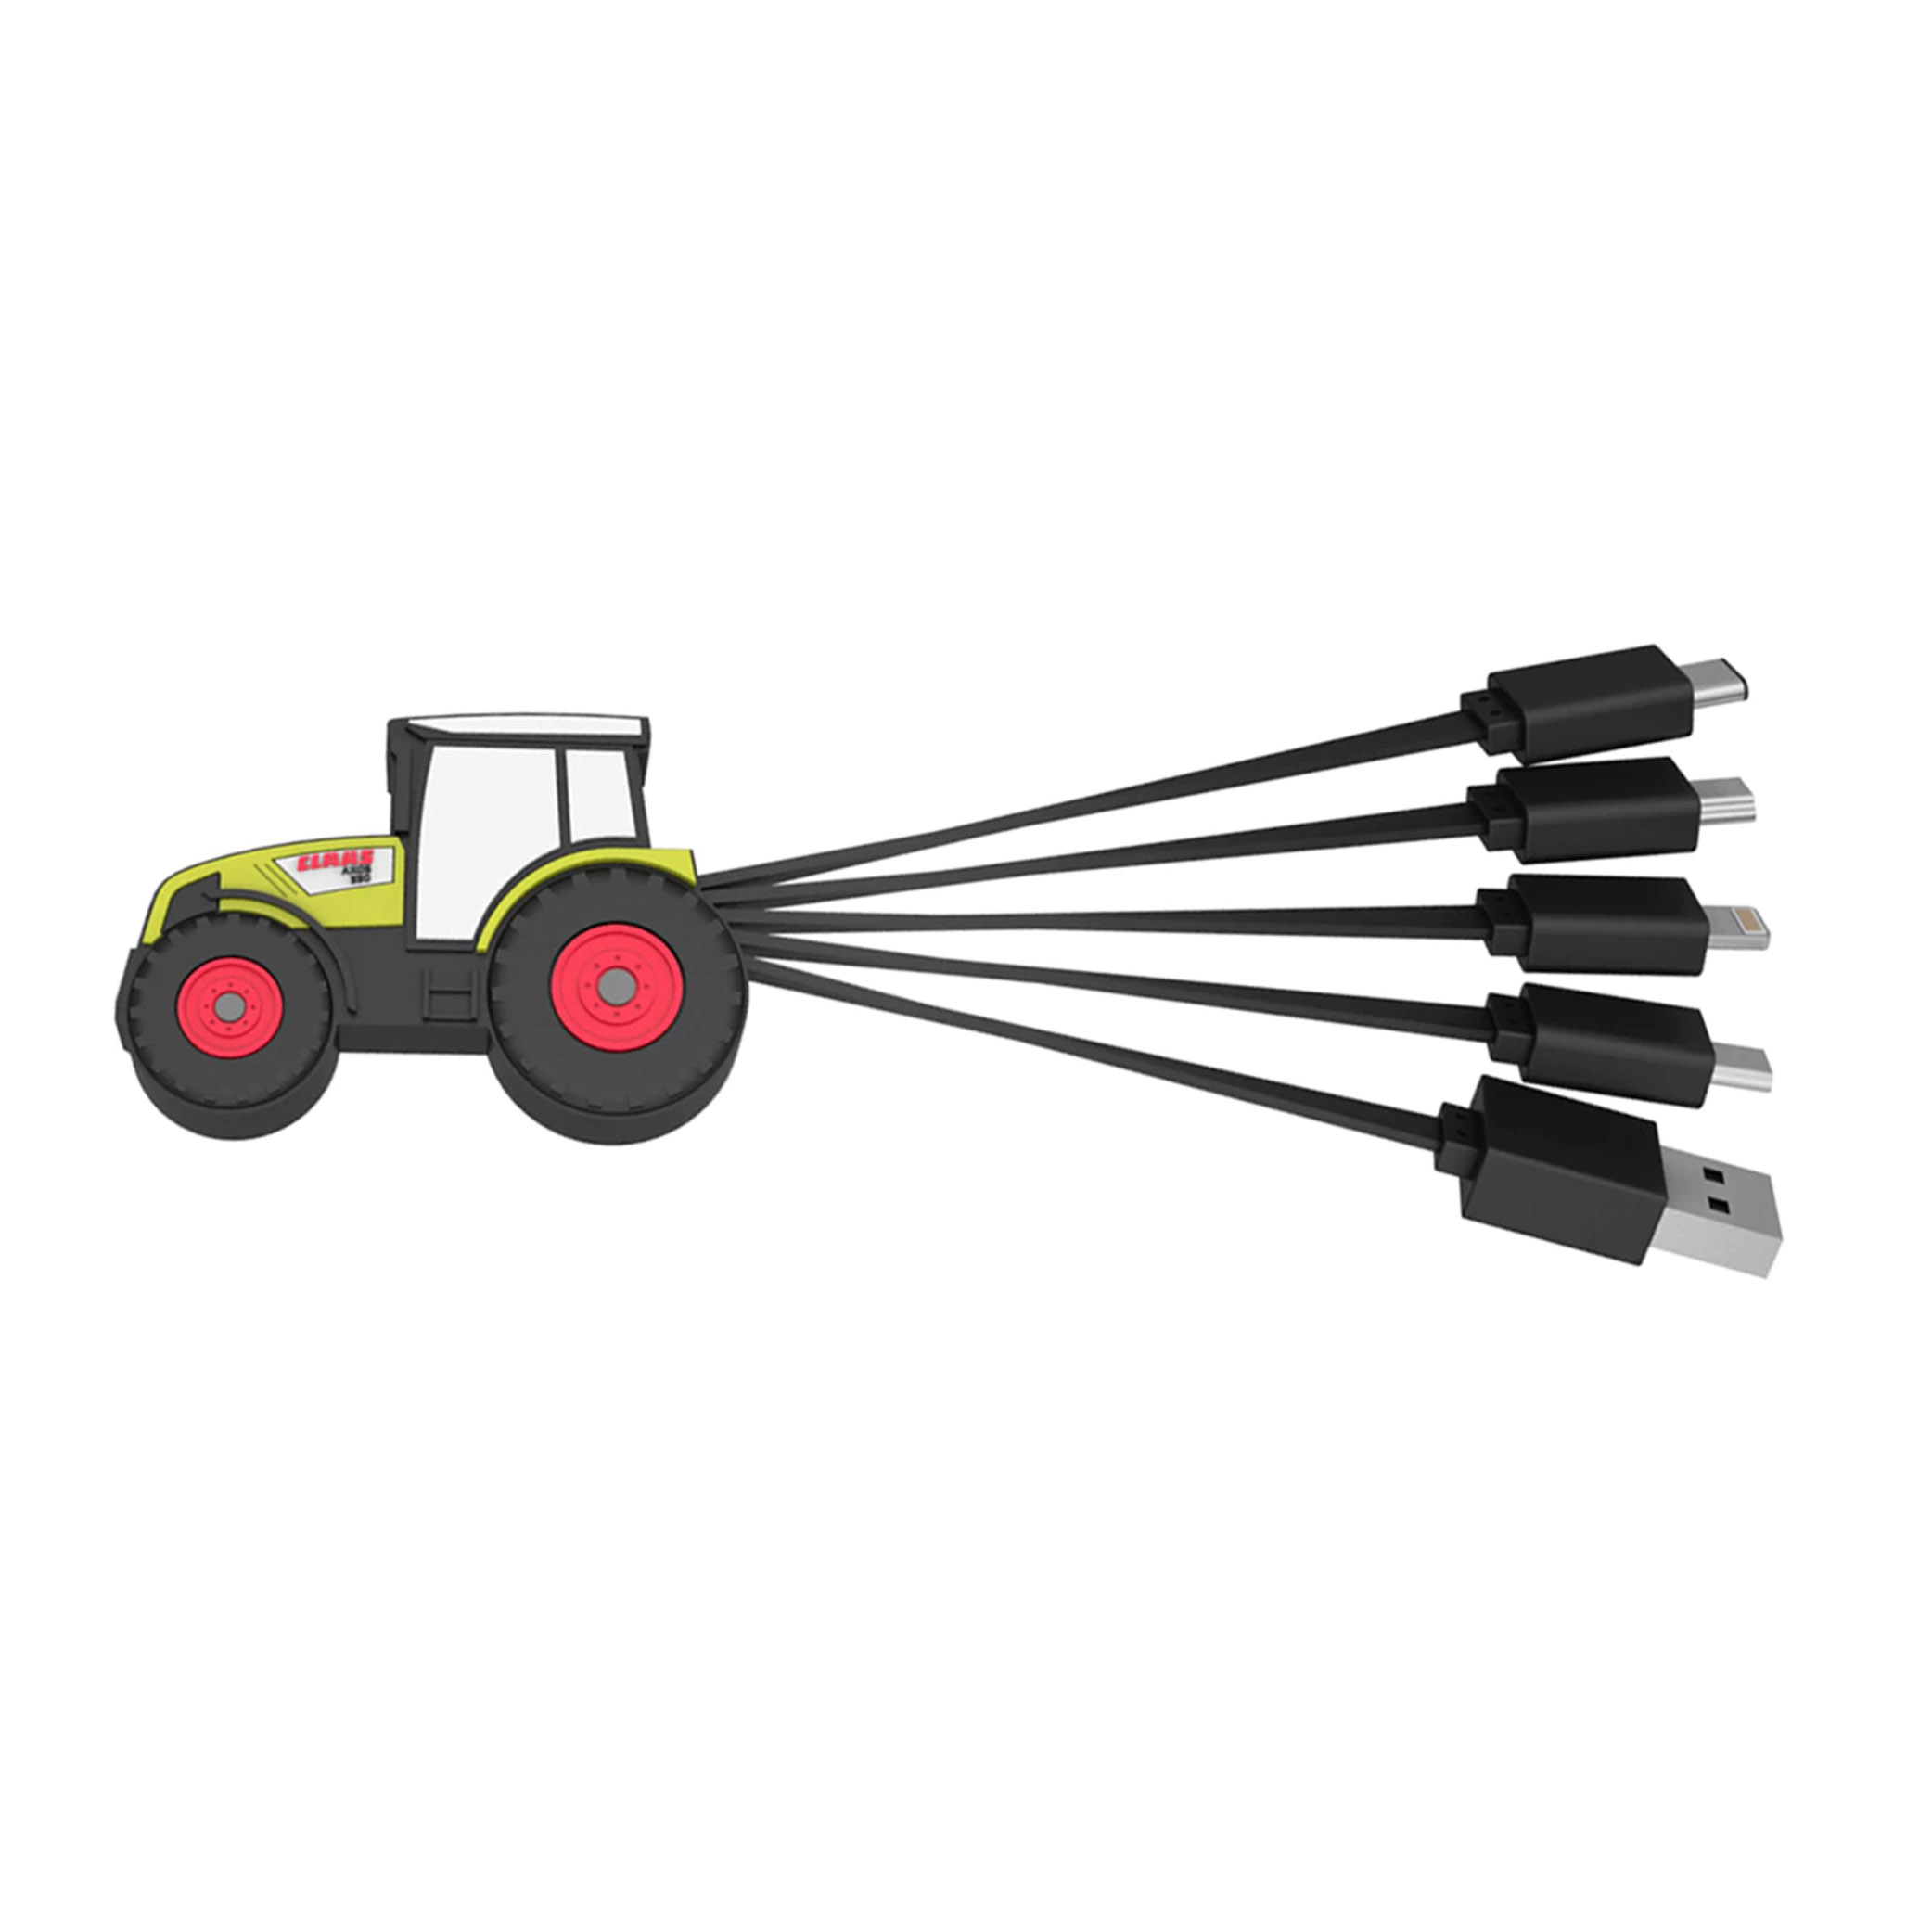 Custom Logo Multi Ports USB Charging Cables